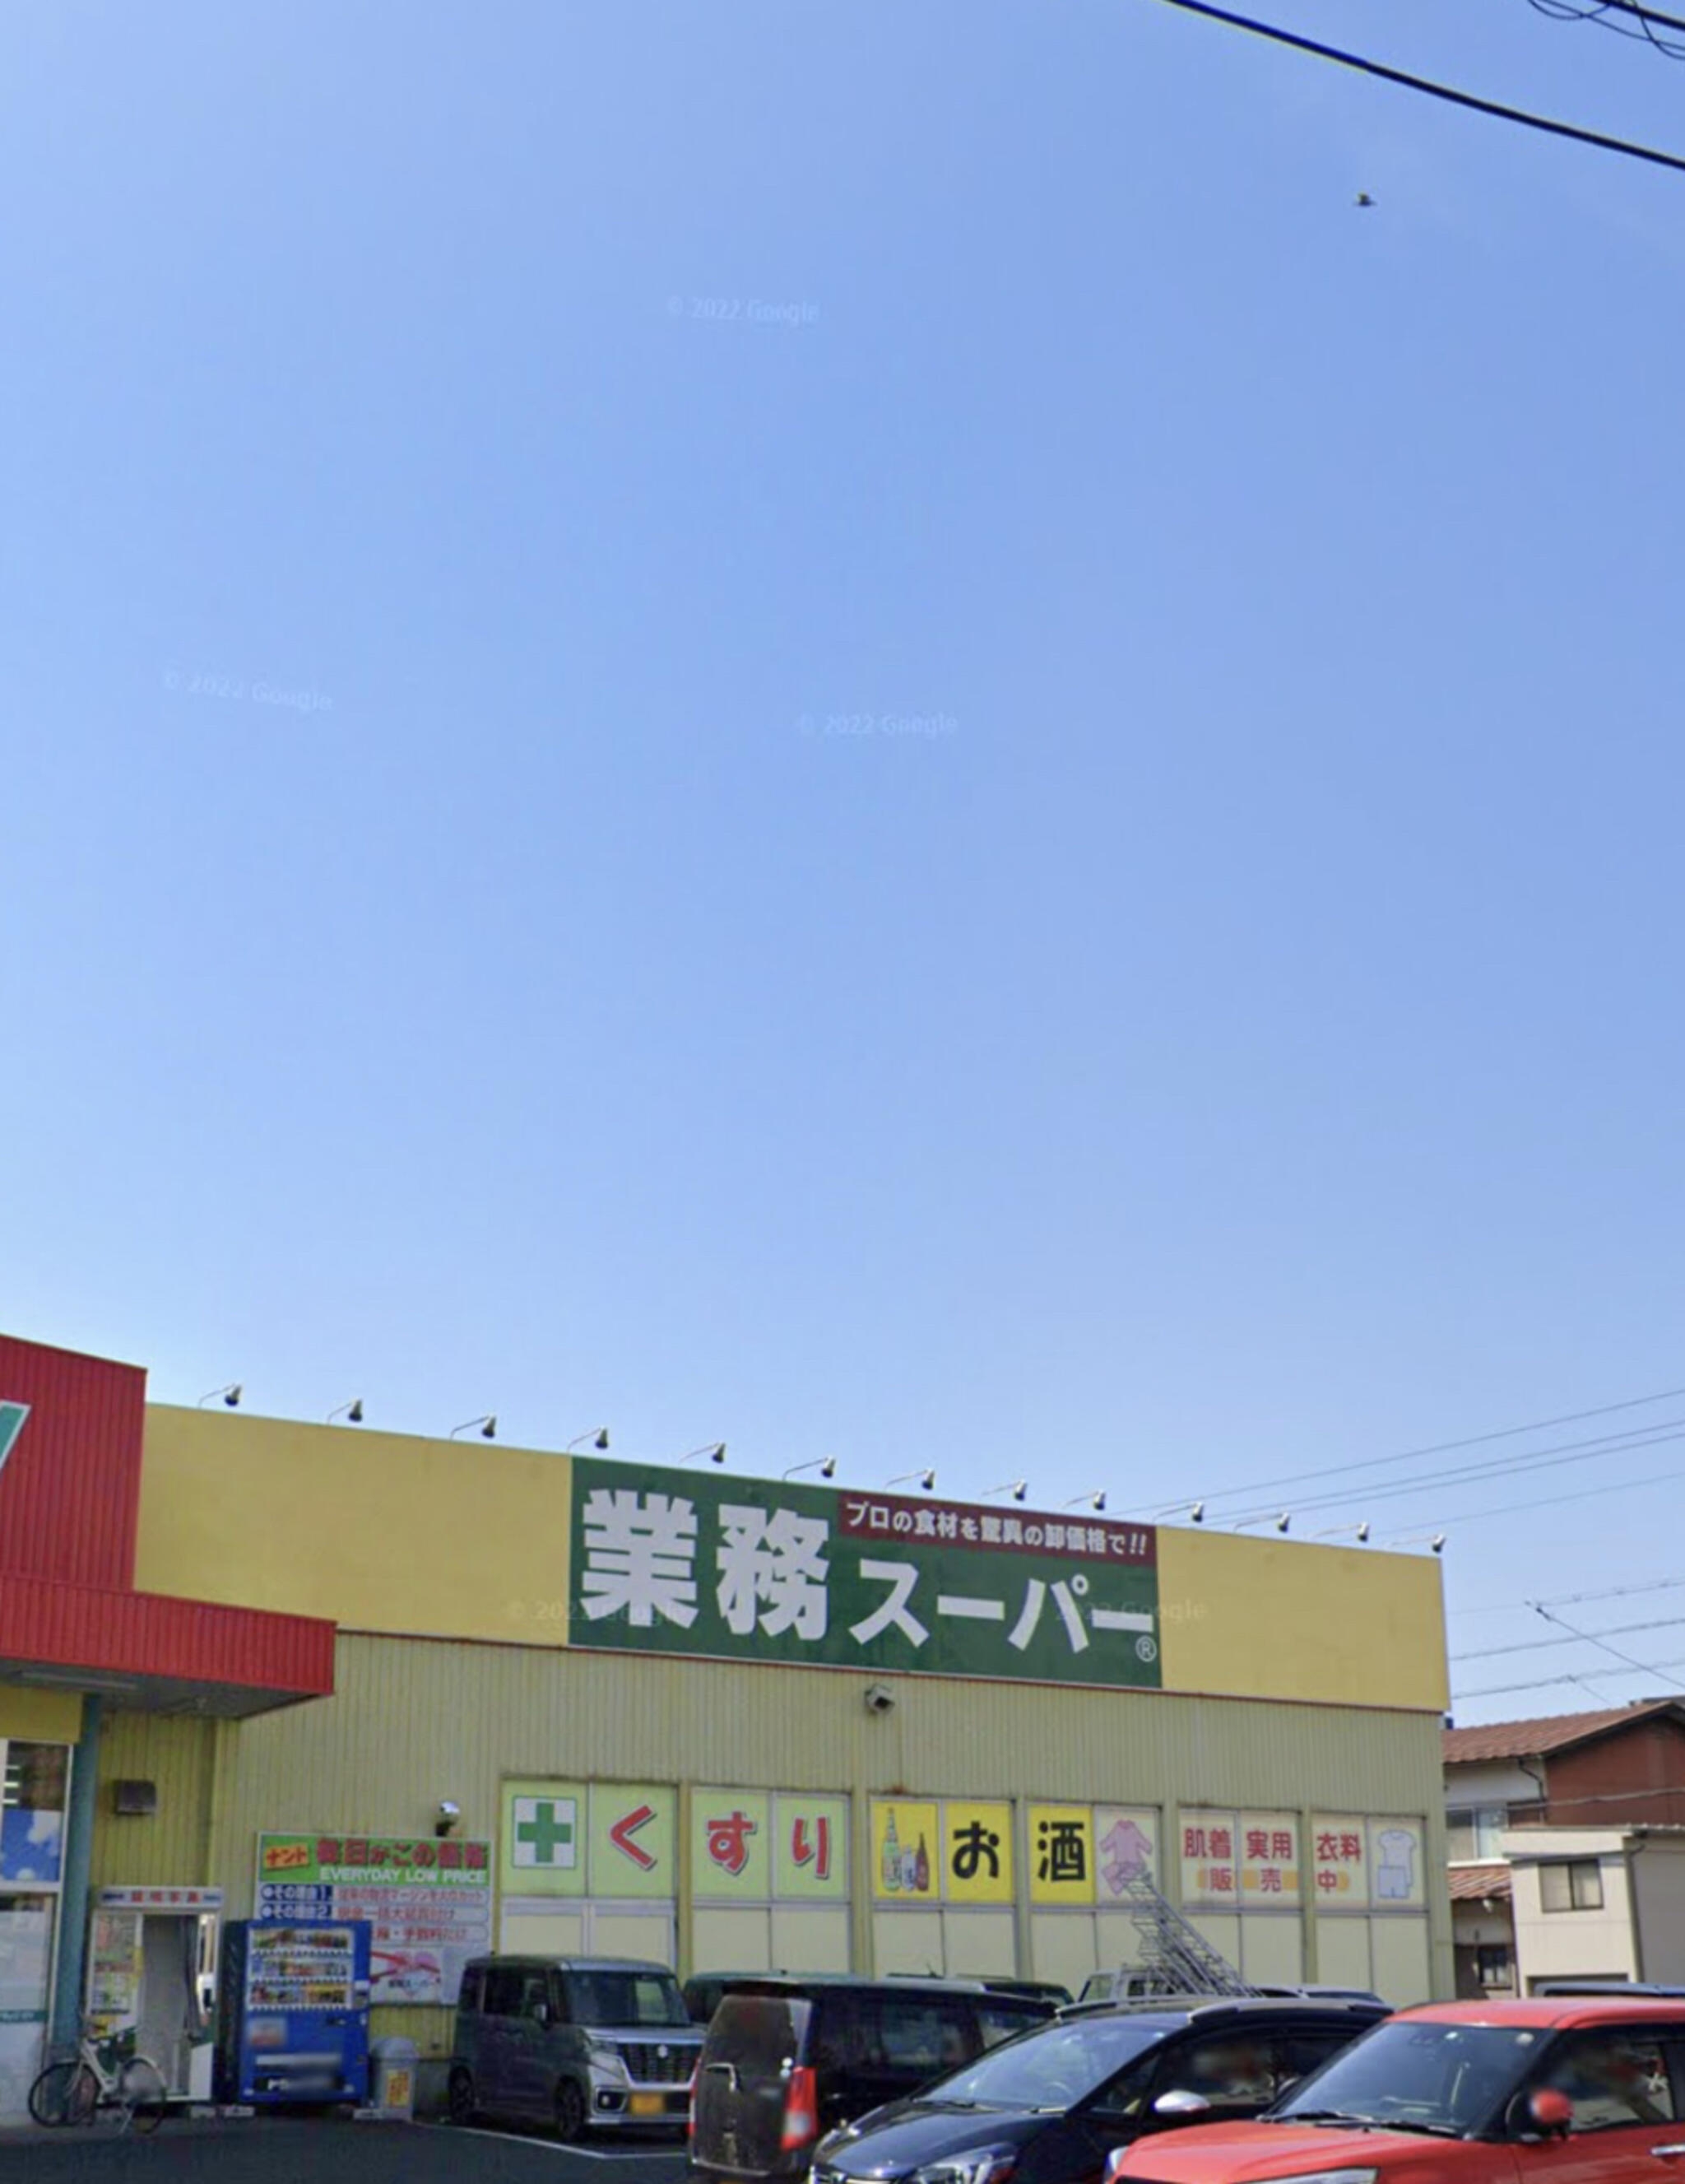 業務スーパー 鳥取駅南店の代表写真7